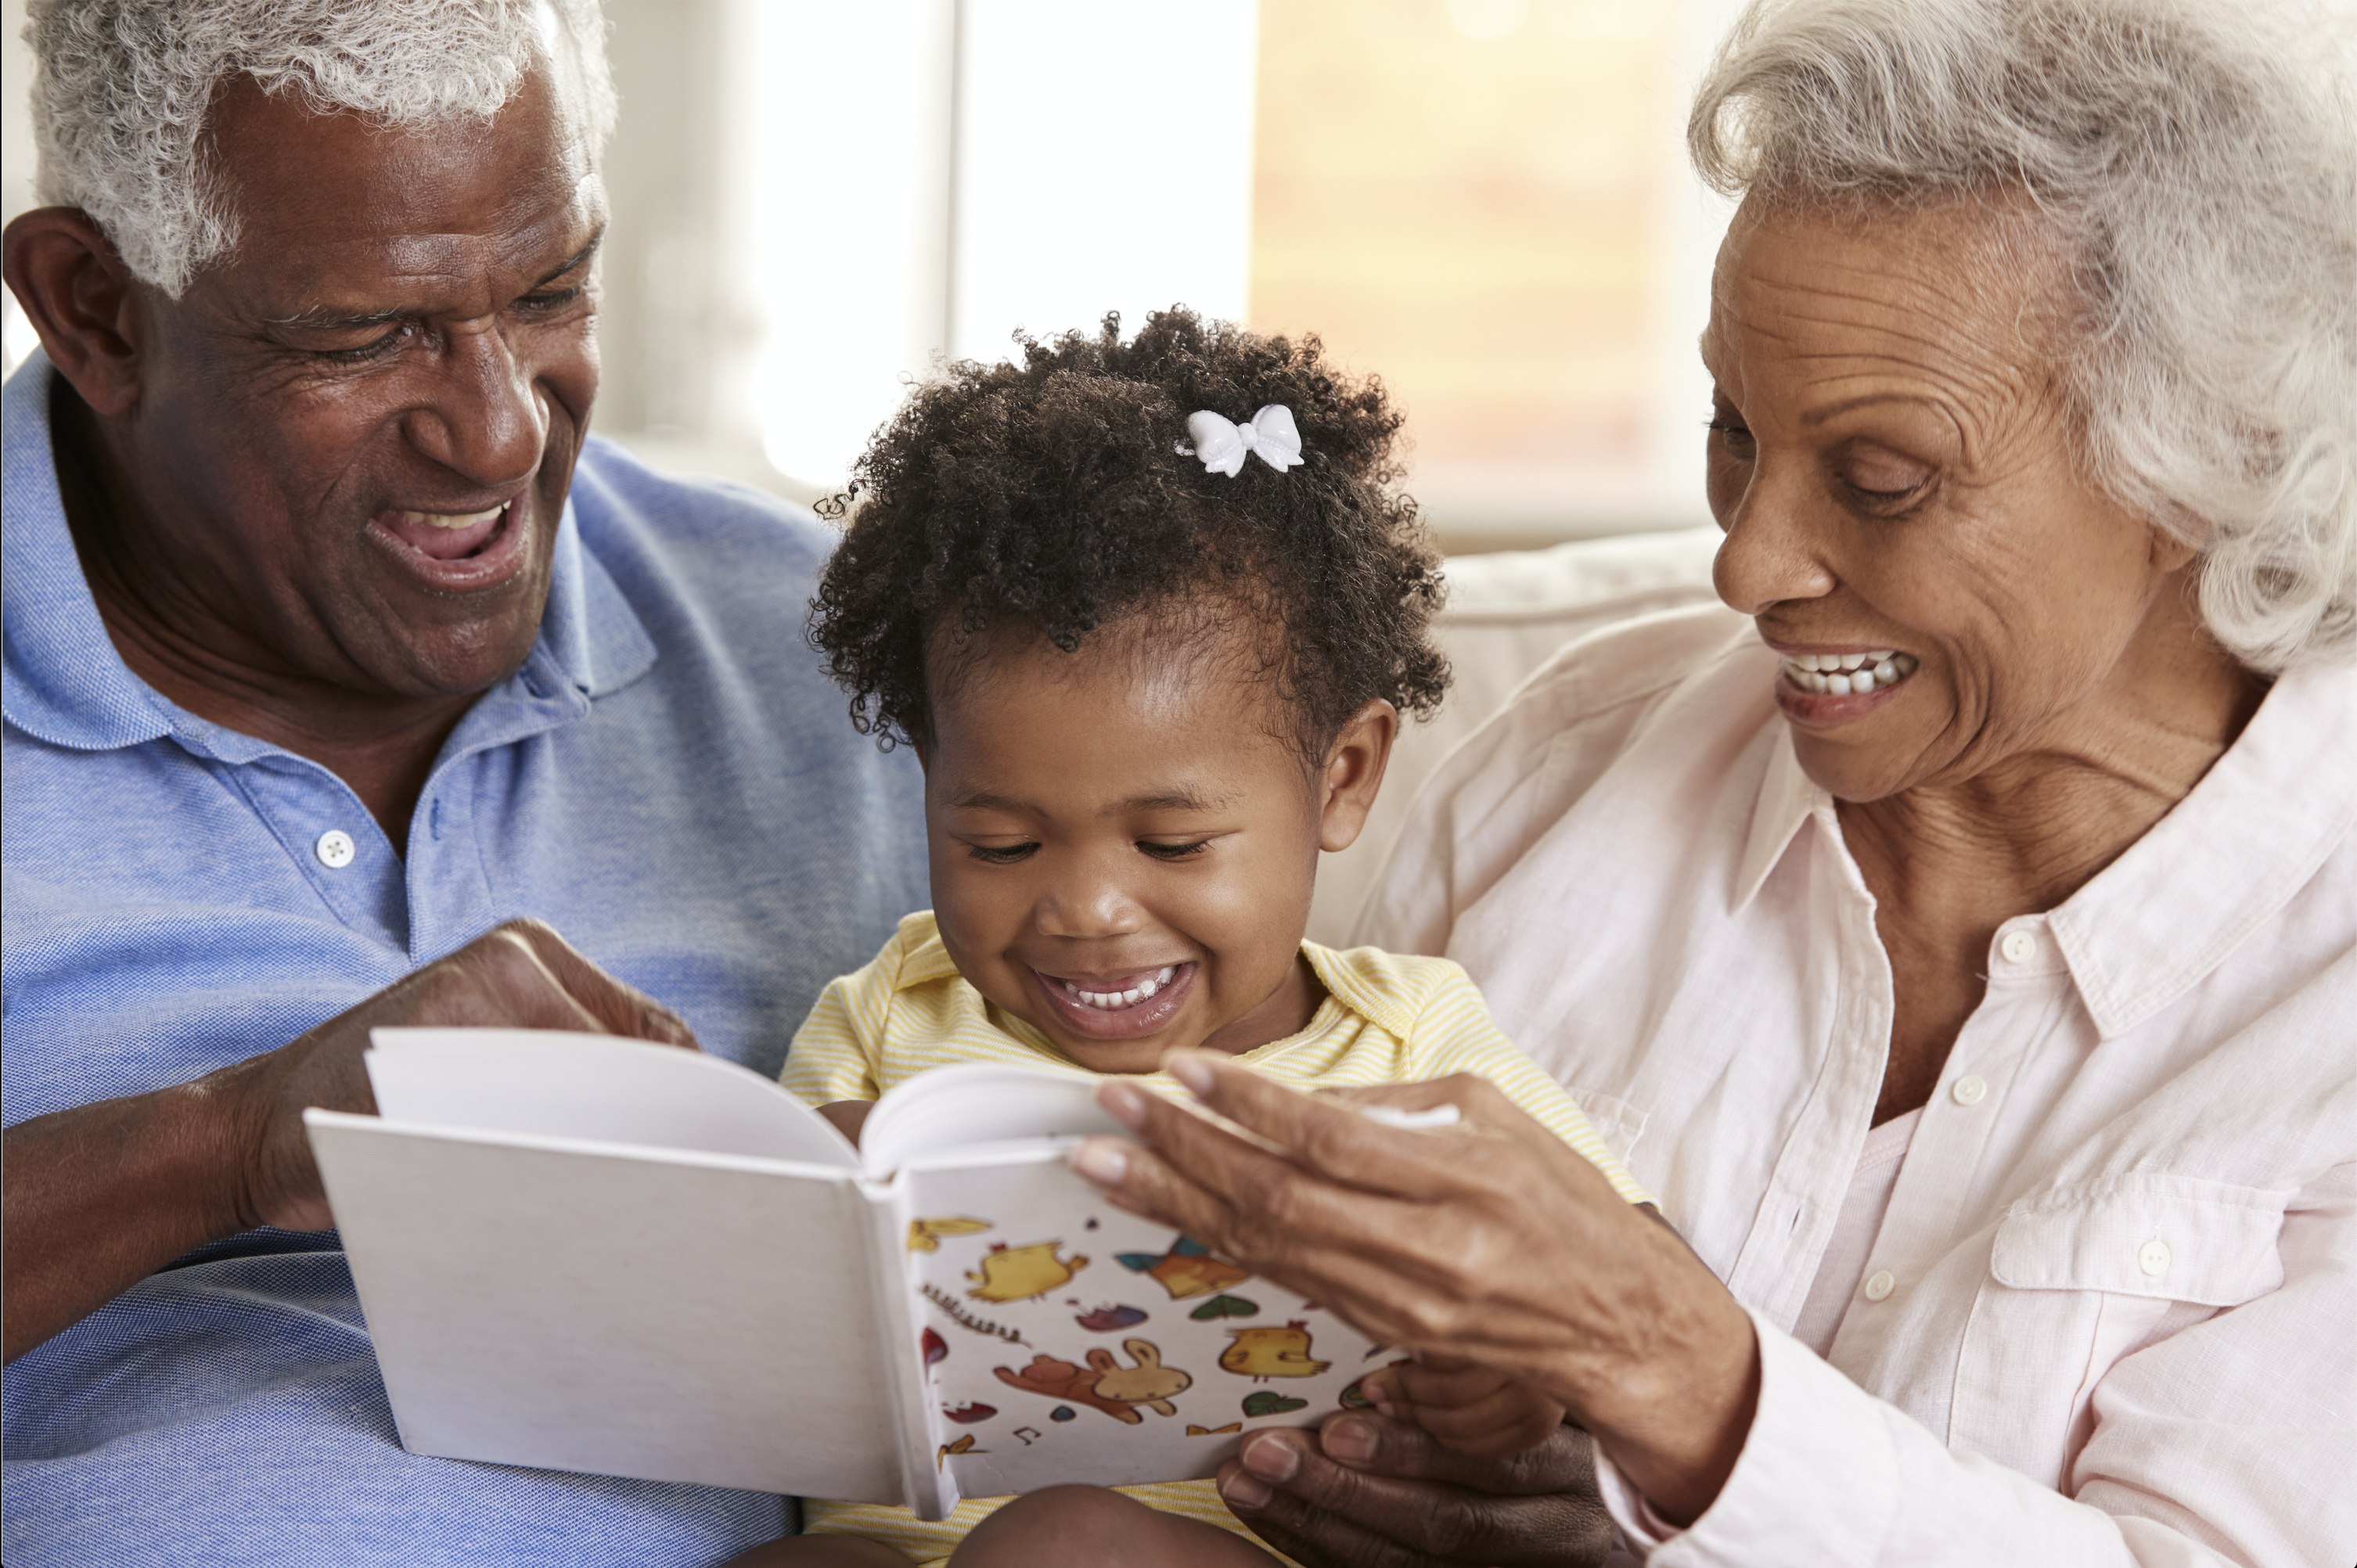 7 Great Activities For Grandparents & Their Grandchildren To Do